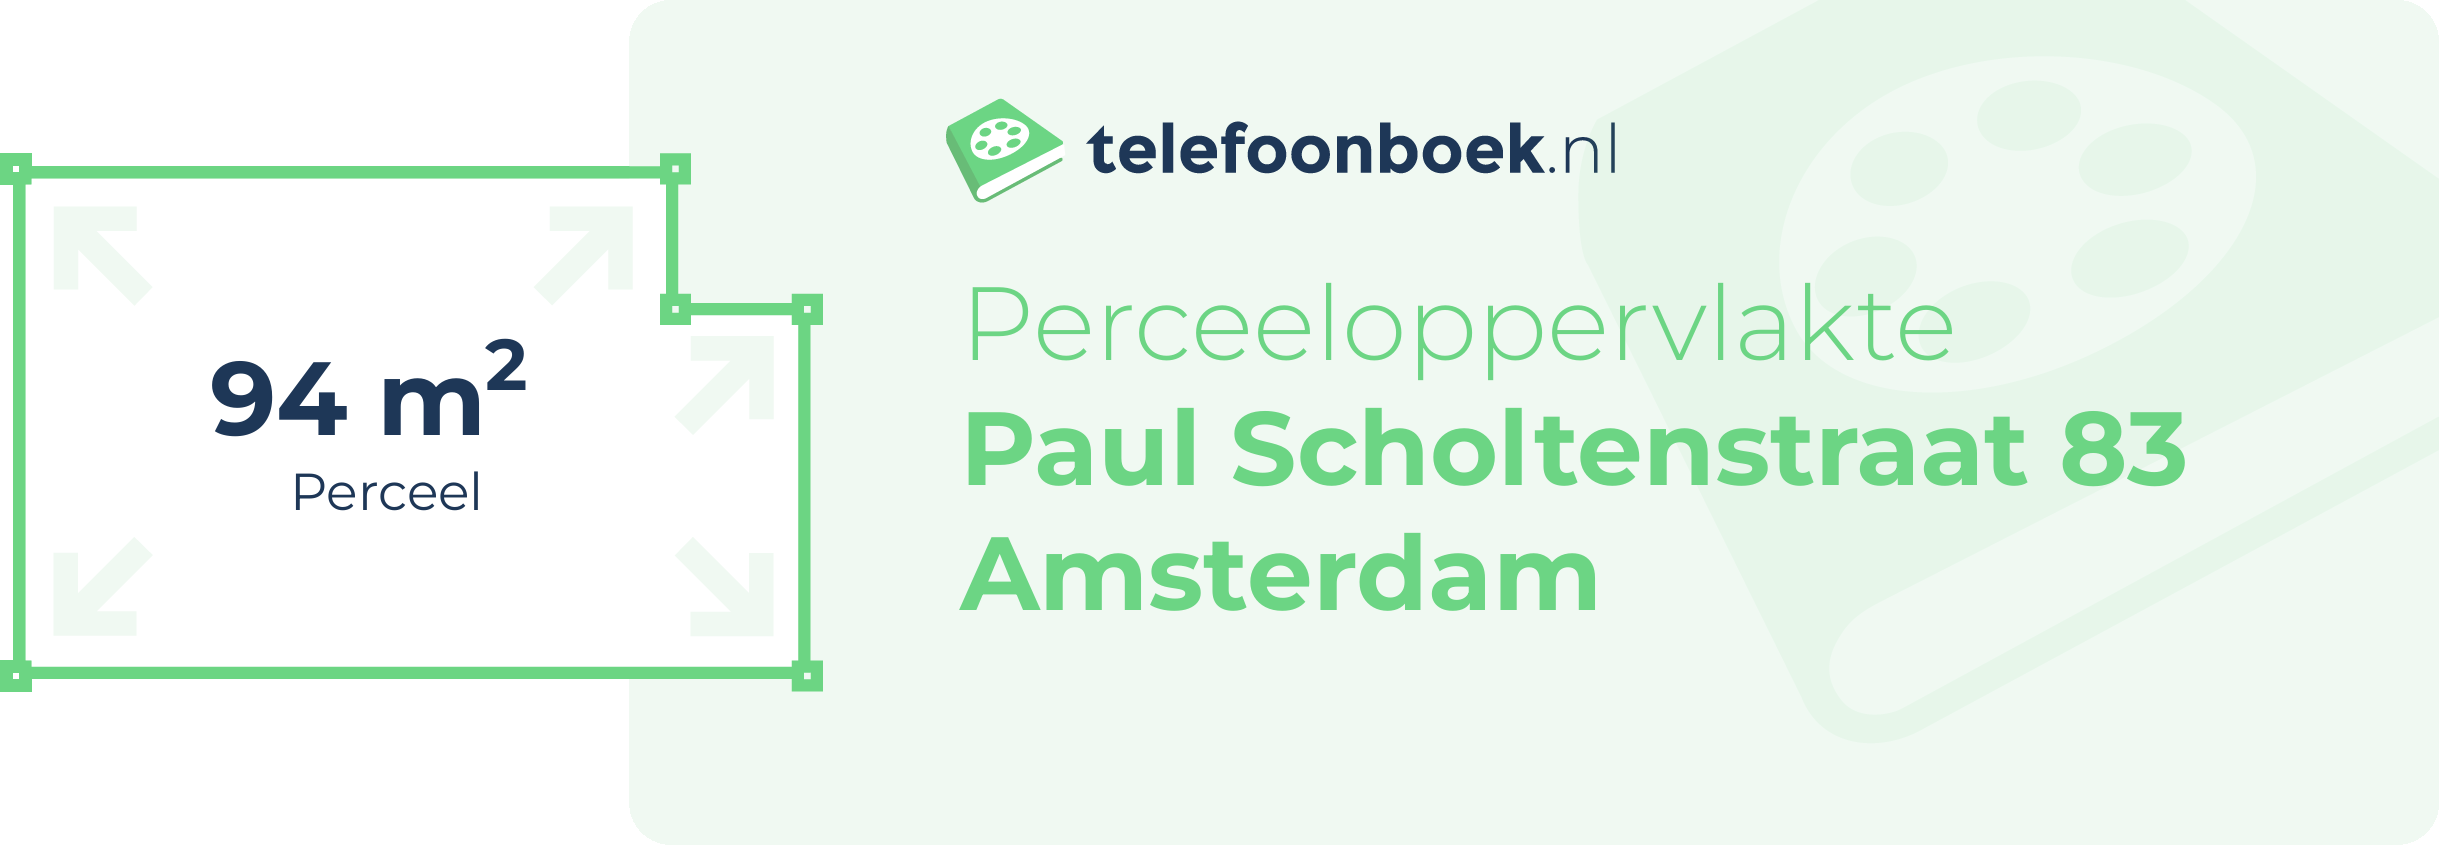 Perceeloppervlakte Paul Scholtenstraat 83 Amsterdam